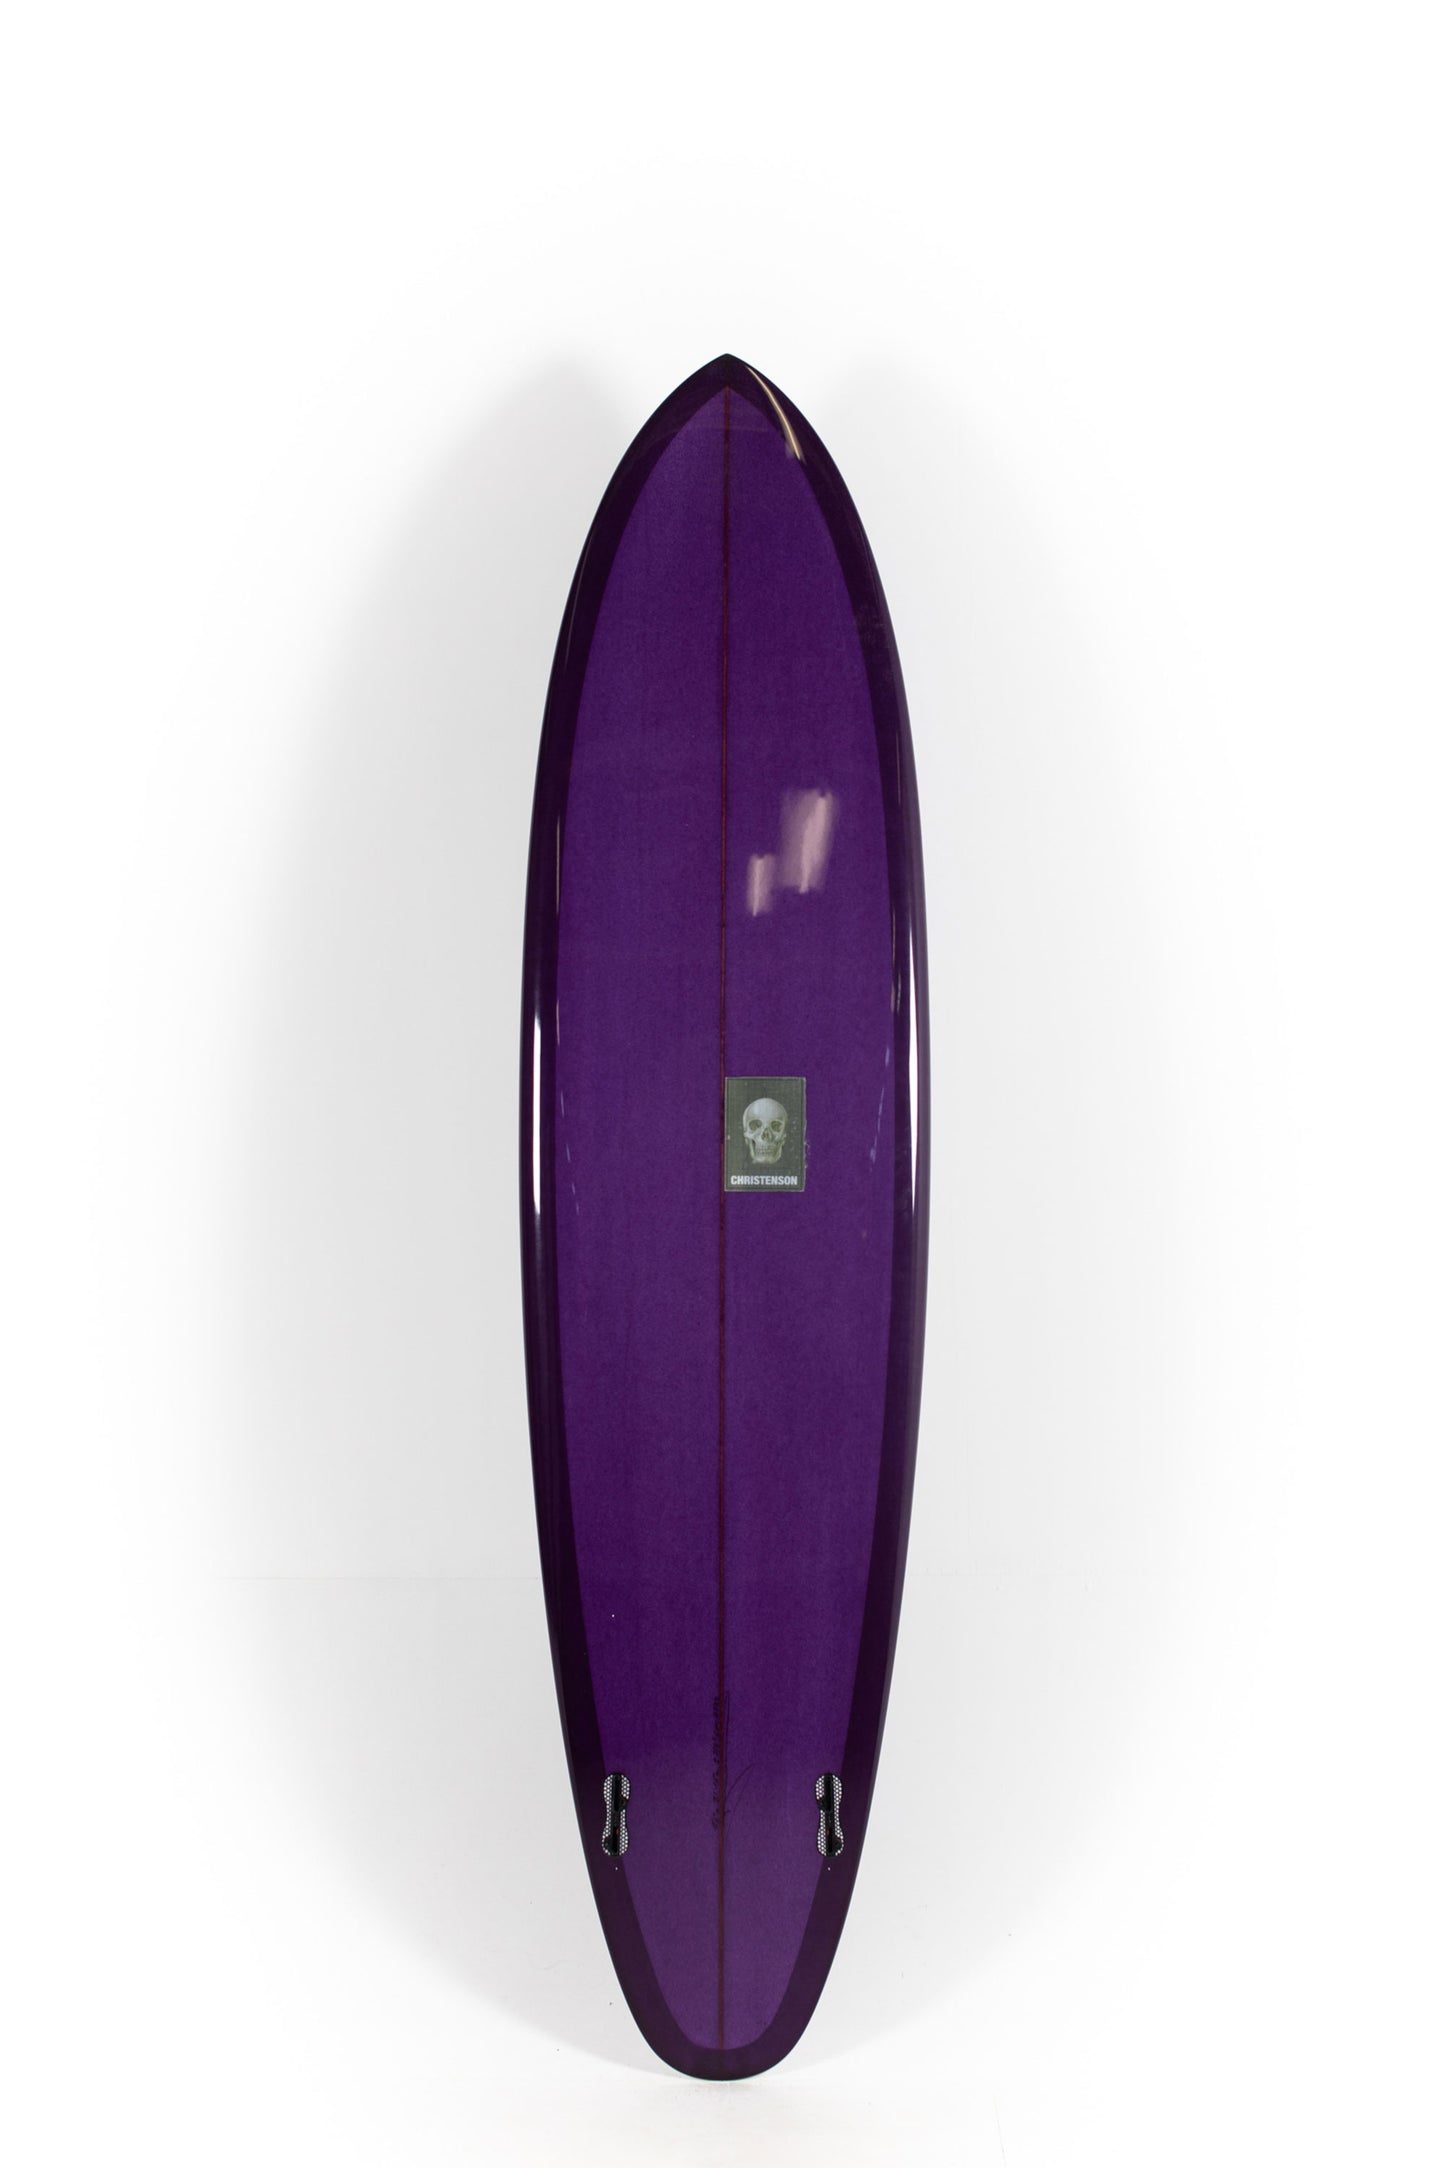 Pukas Surf shop - Christenson Surfboards - TWIN TRACKER - 7'6" x 21 1/4 x 2 7/8 - CX04733